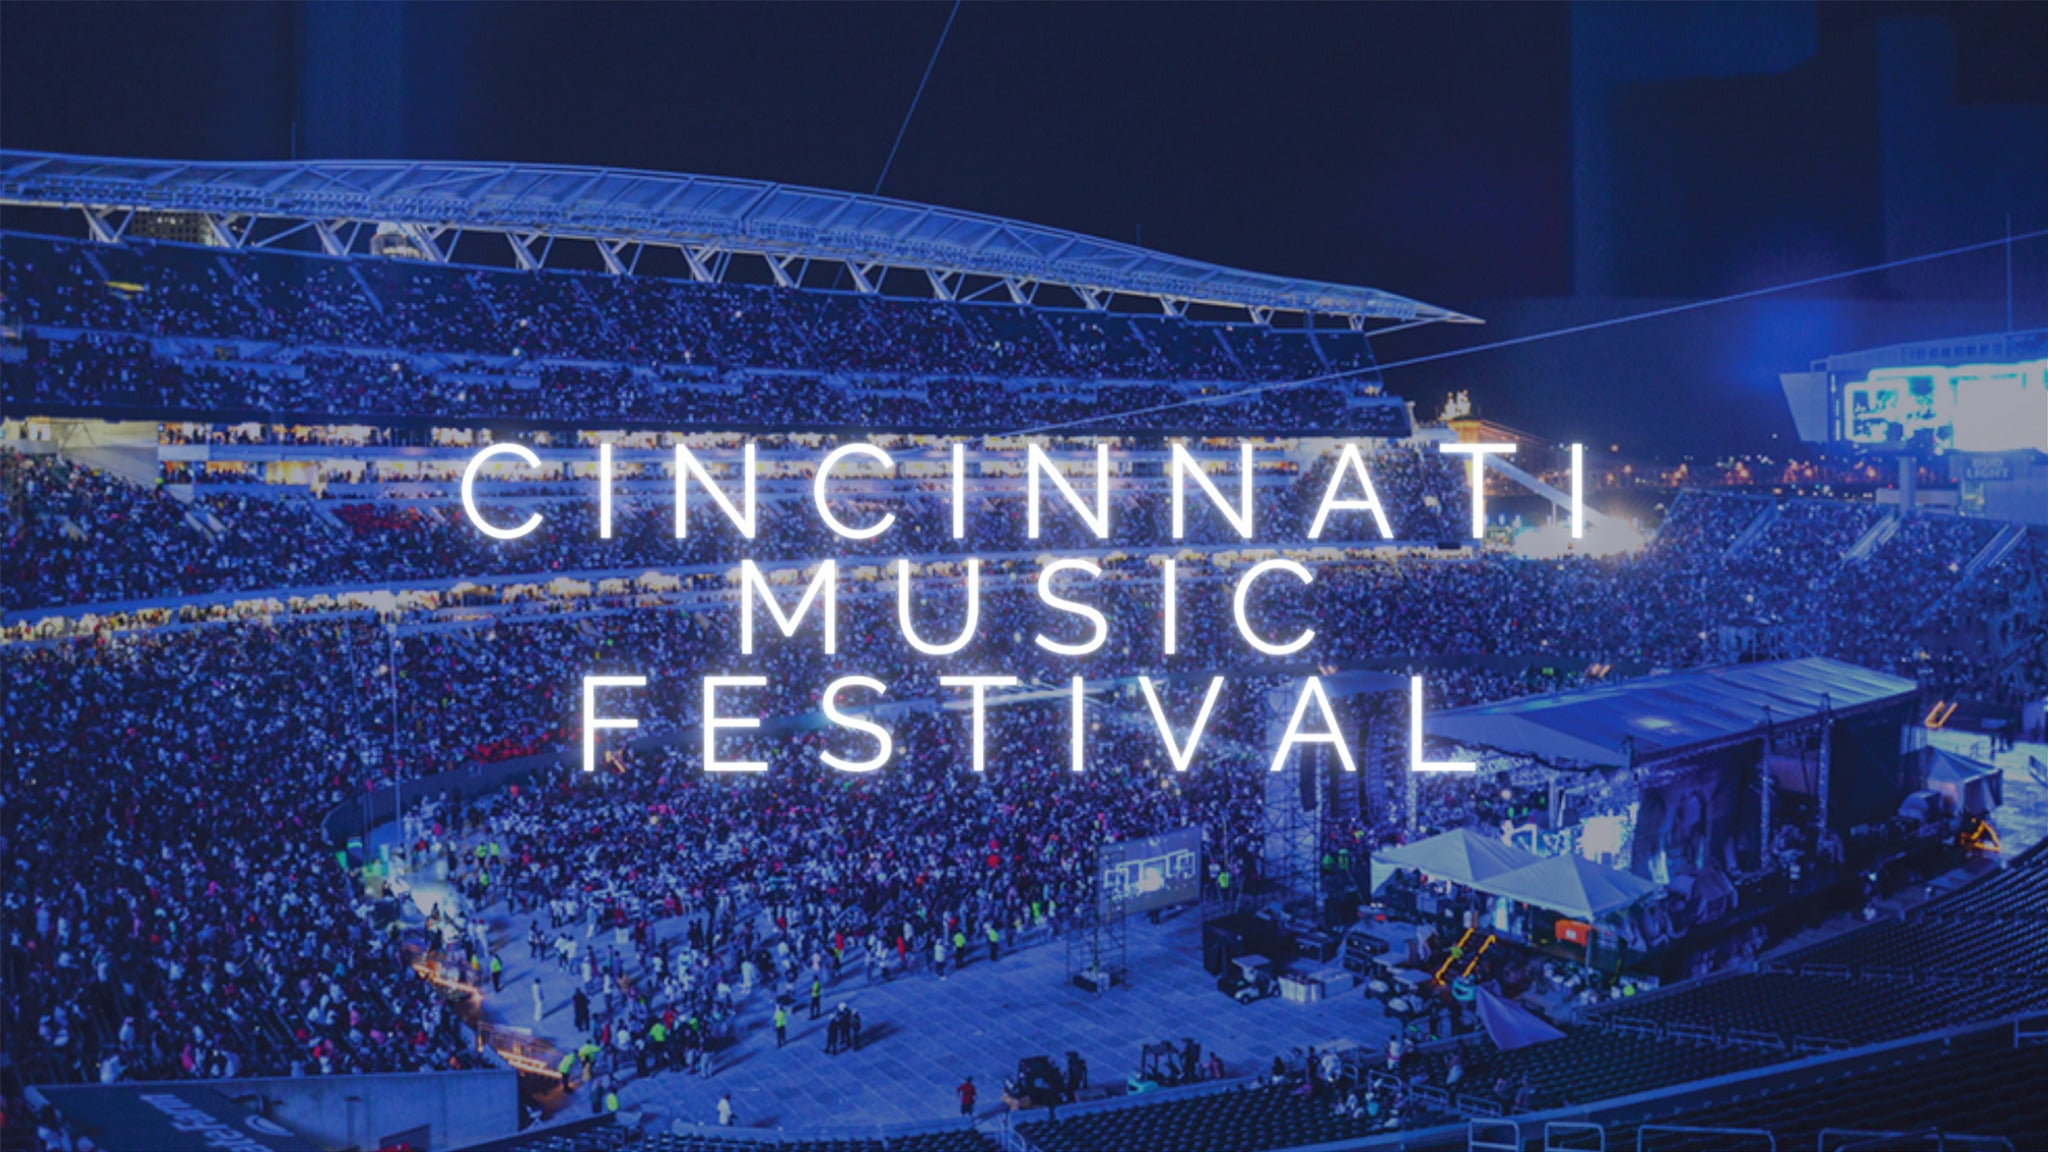 exclusive presale password for Cincinnati Music Festival presented by P&G tickets in Cincinnati at Paycor Stadium